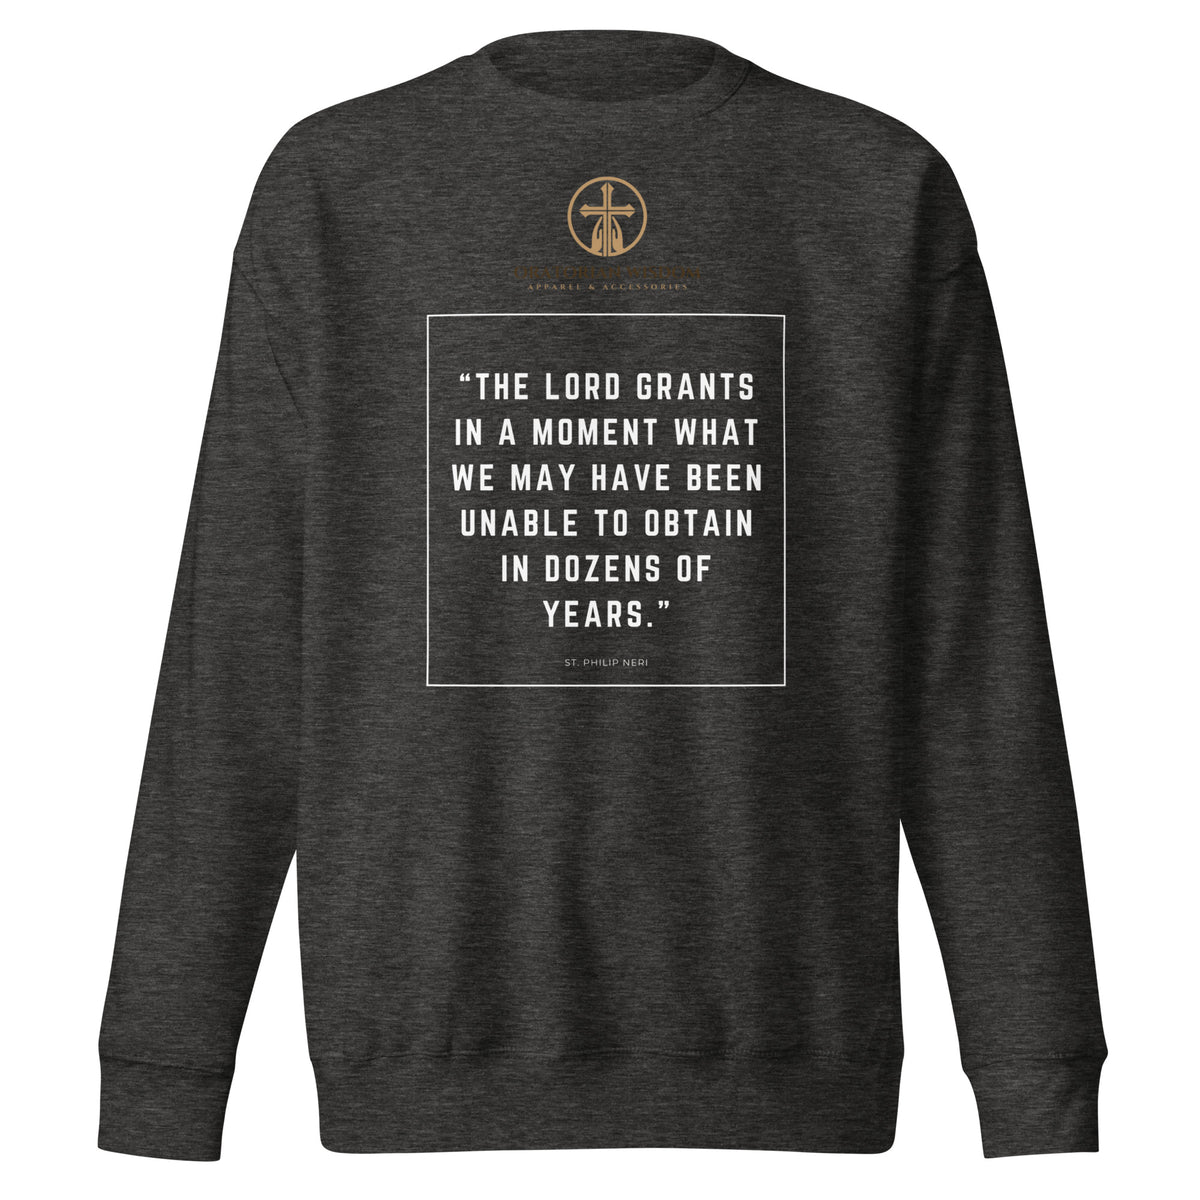 Classic Printed Sweatshirt | Unisex Sweatshirt | Oratorian Wisdom